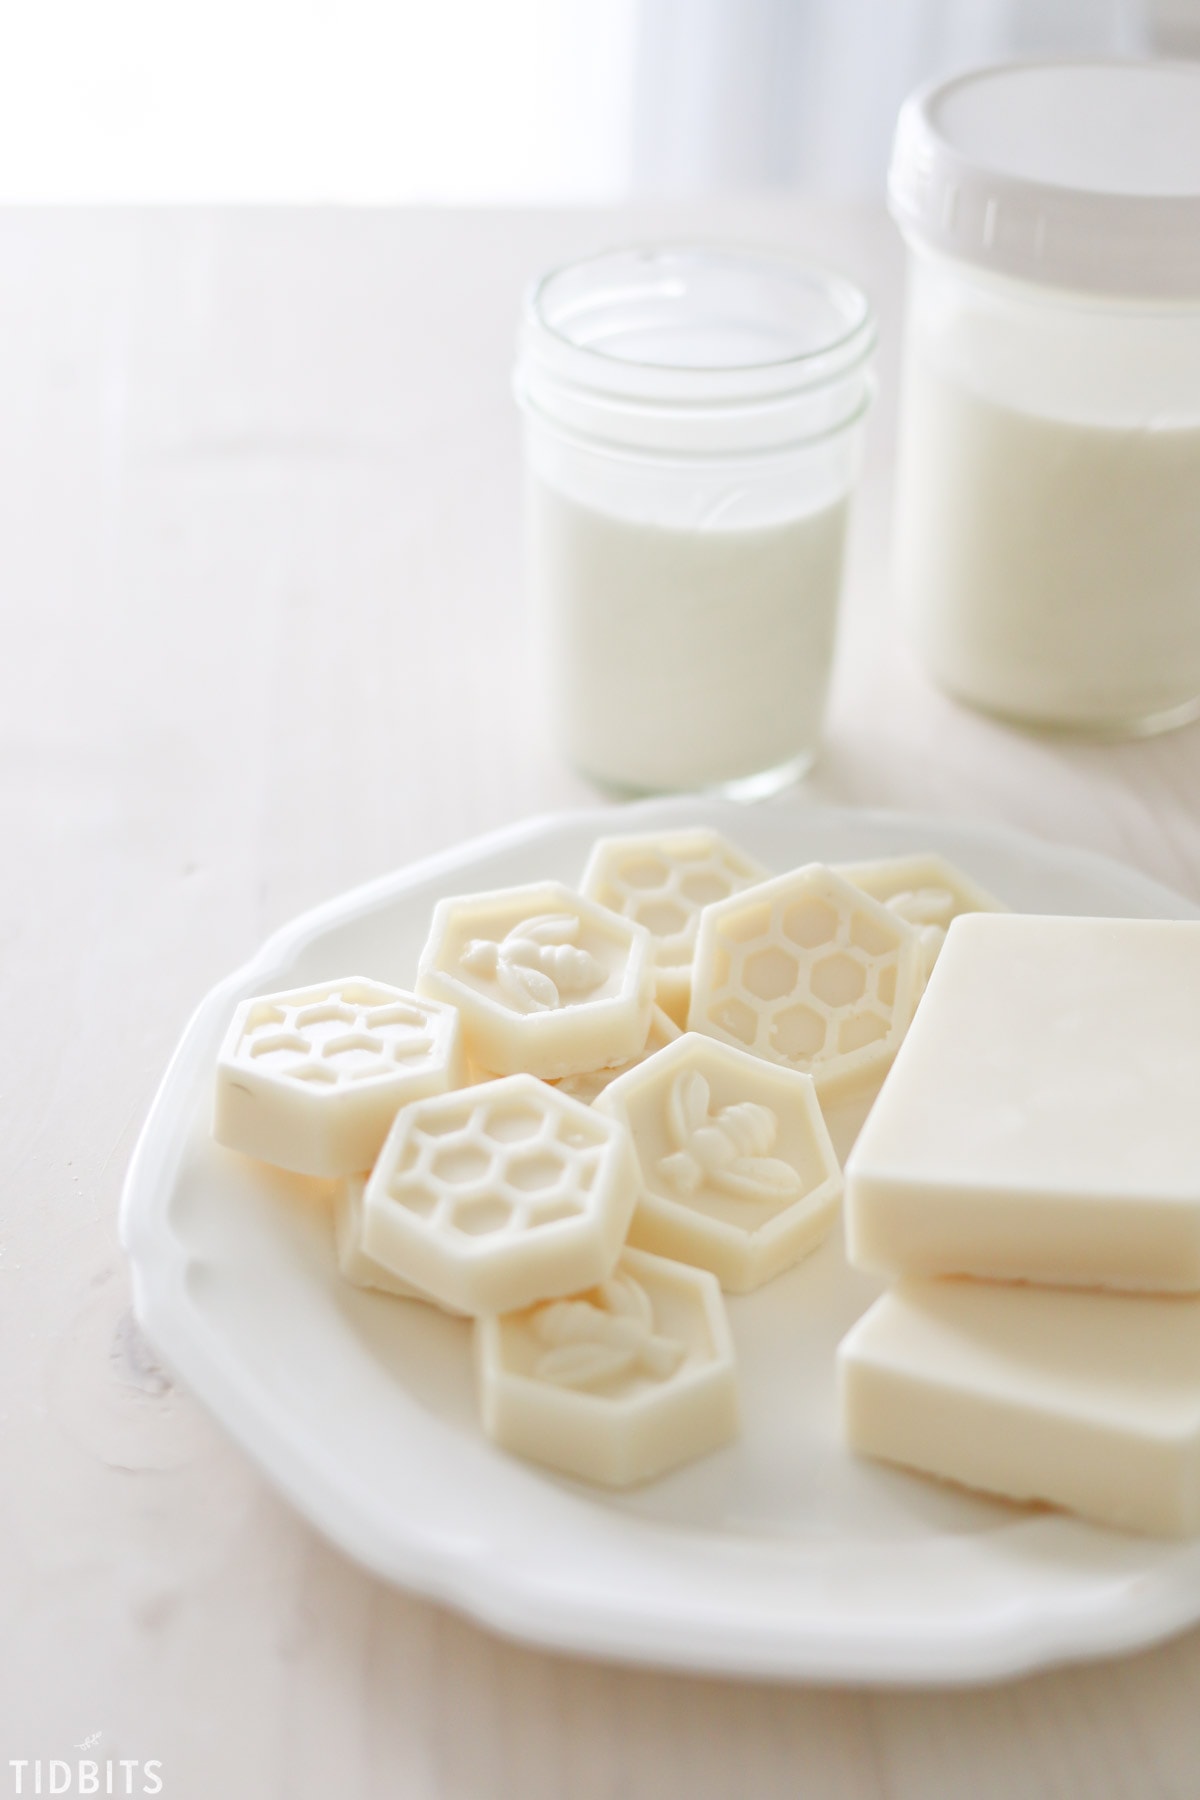 How to Make Goat Milk Soap with Honey (Goat Milk Soap Recipe)